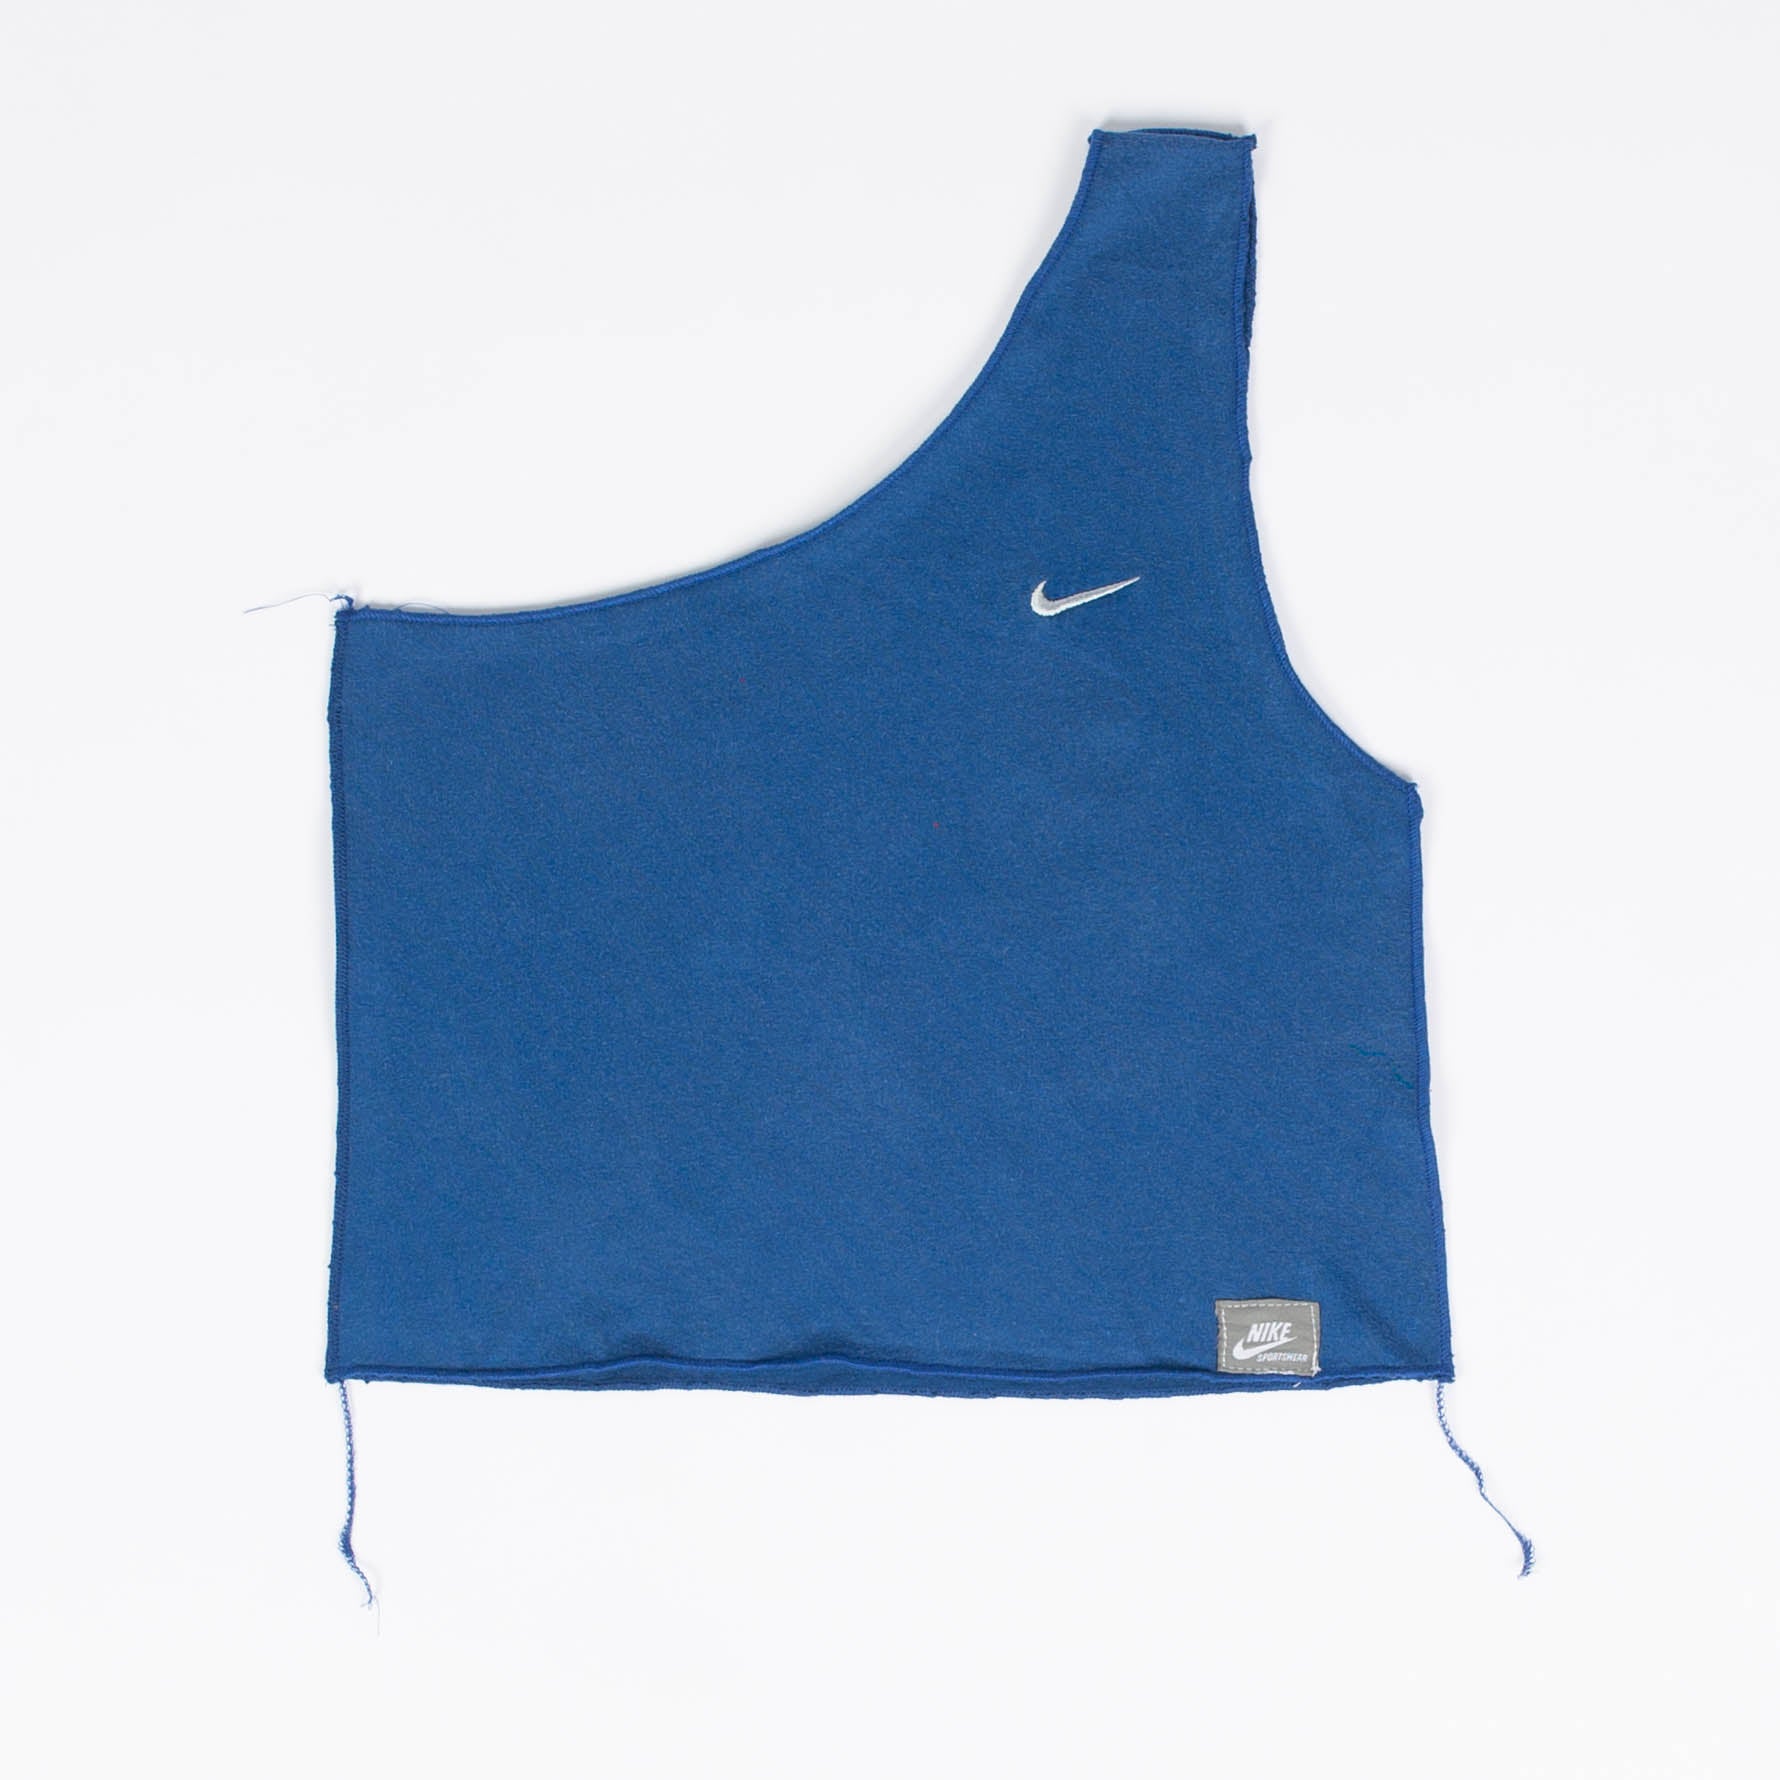 DCNSTRCTD Blue Nike Crop Top Size M